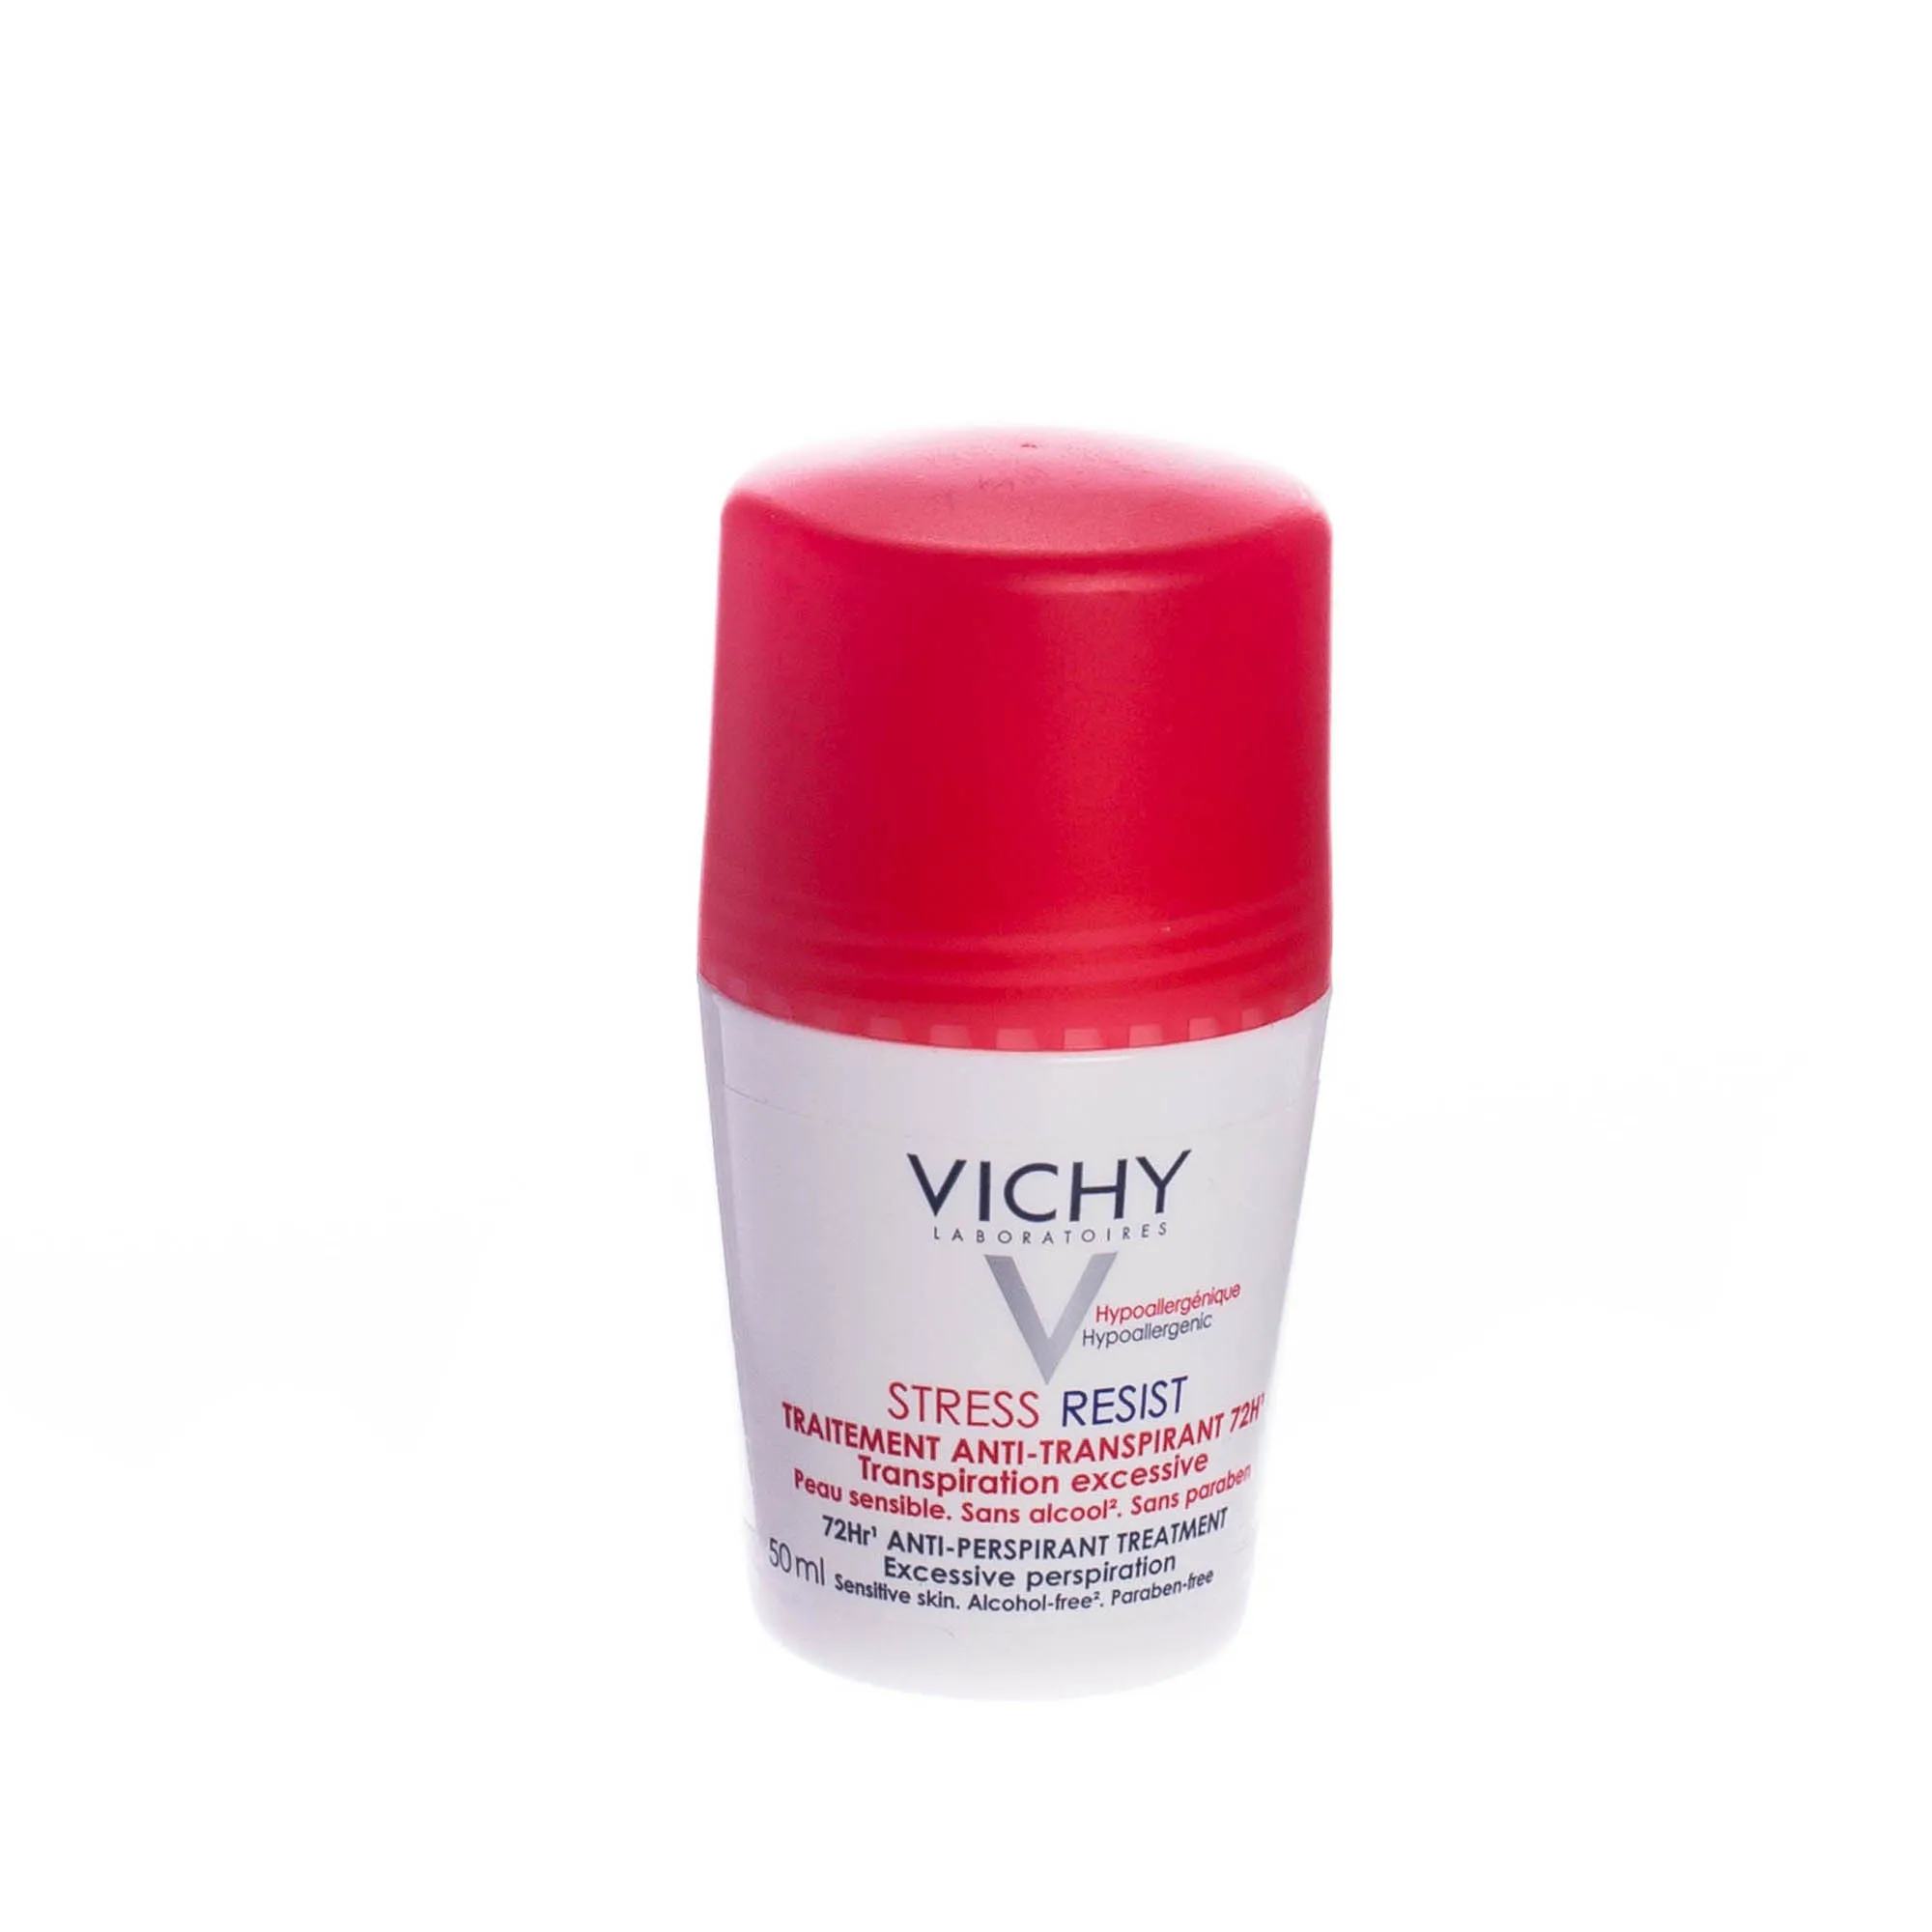 Vichy Laboratoires Stress Resist Traitement Anti-Transpirant 72H, 50ml